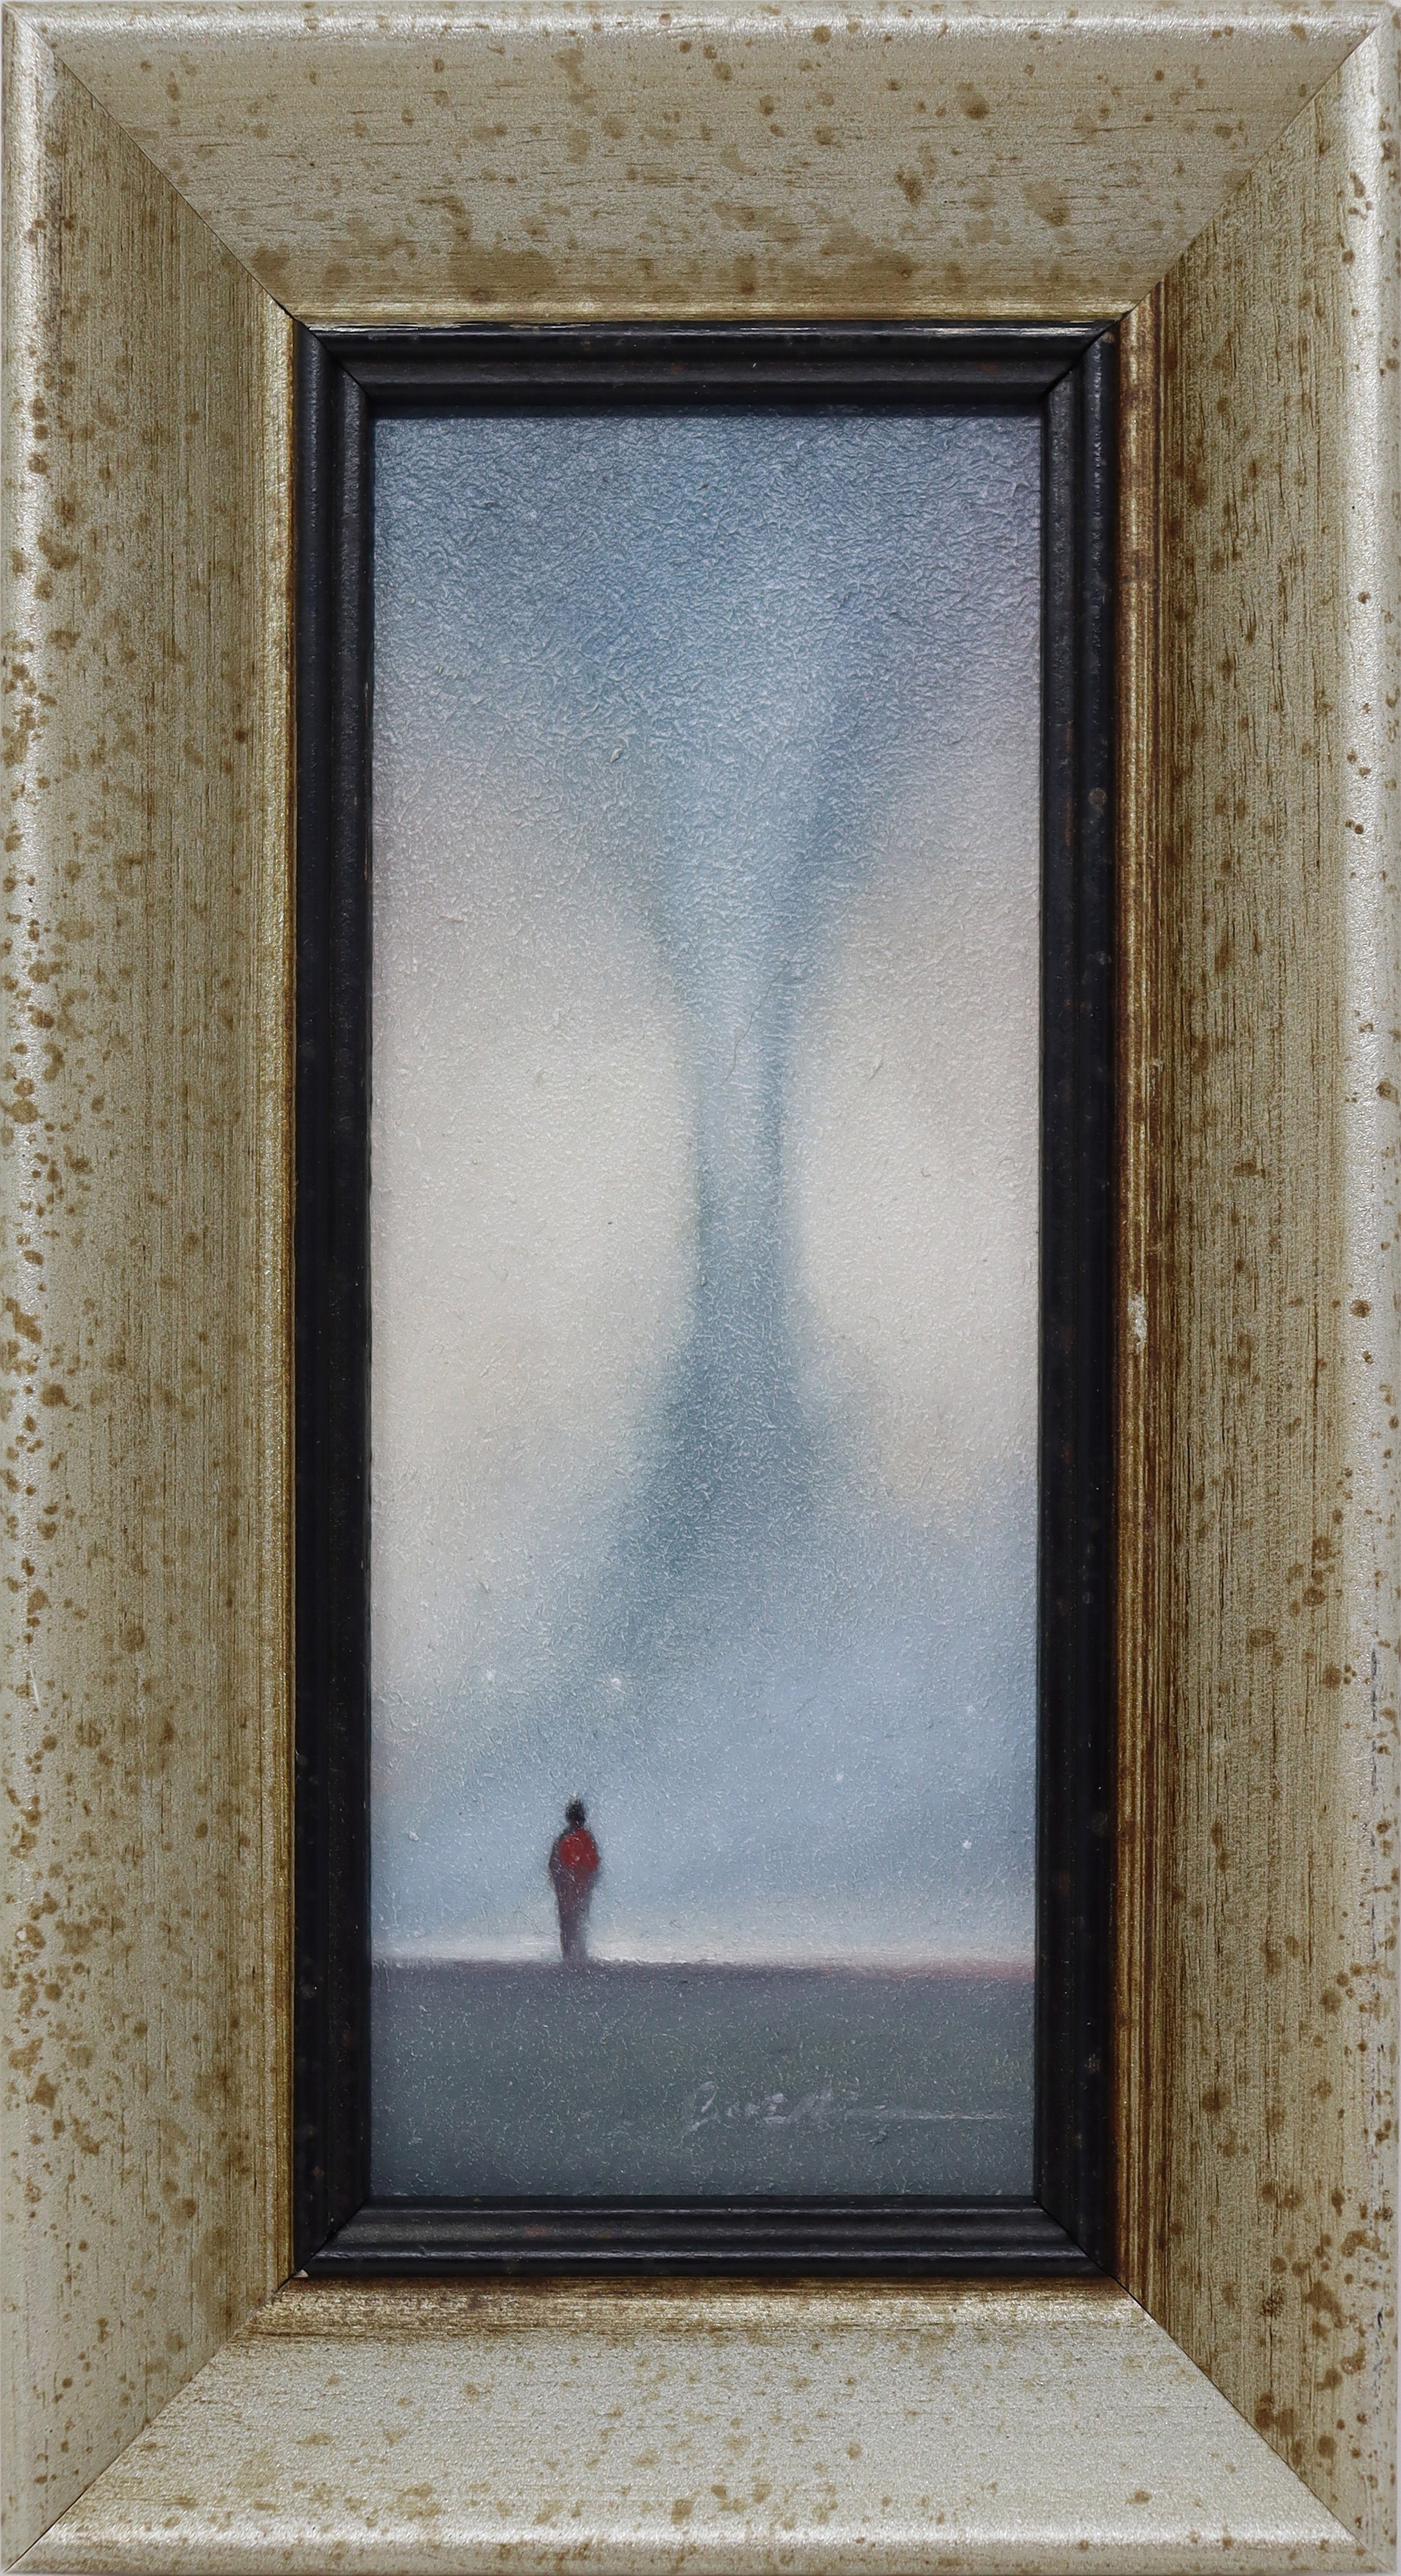 Tornado by Scott E. Hill